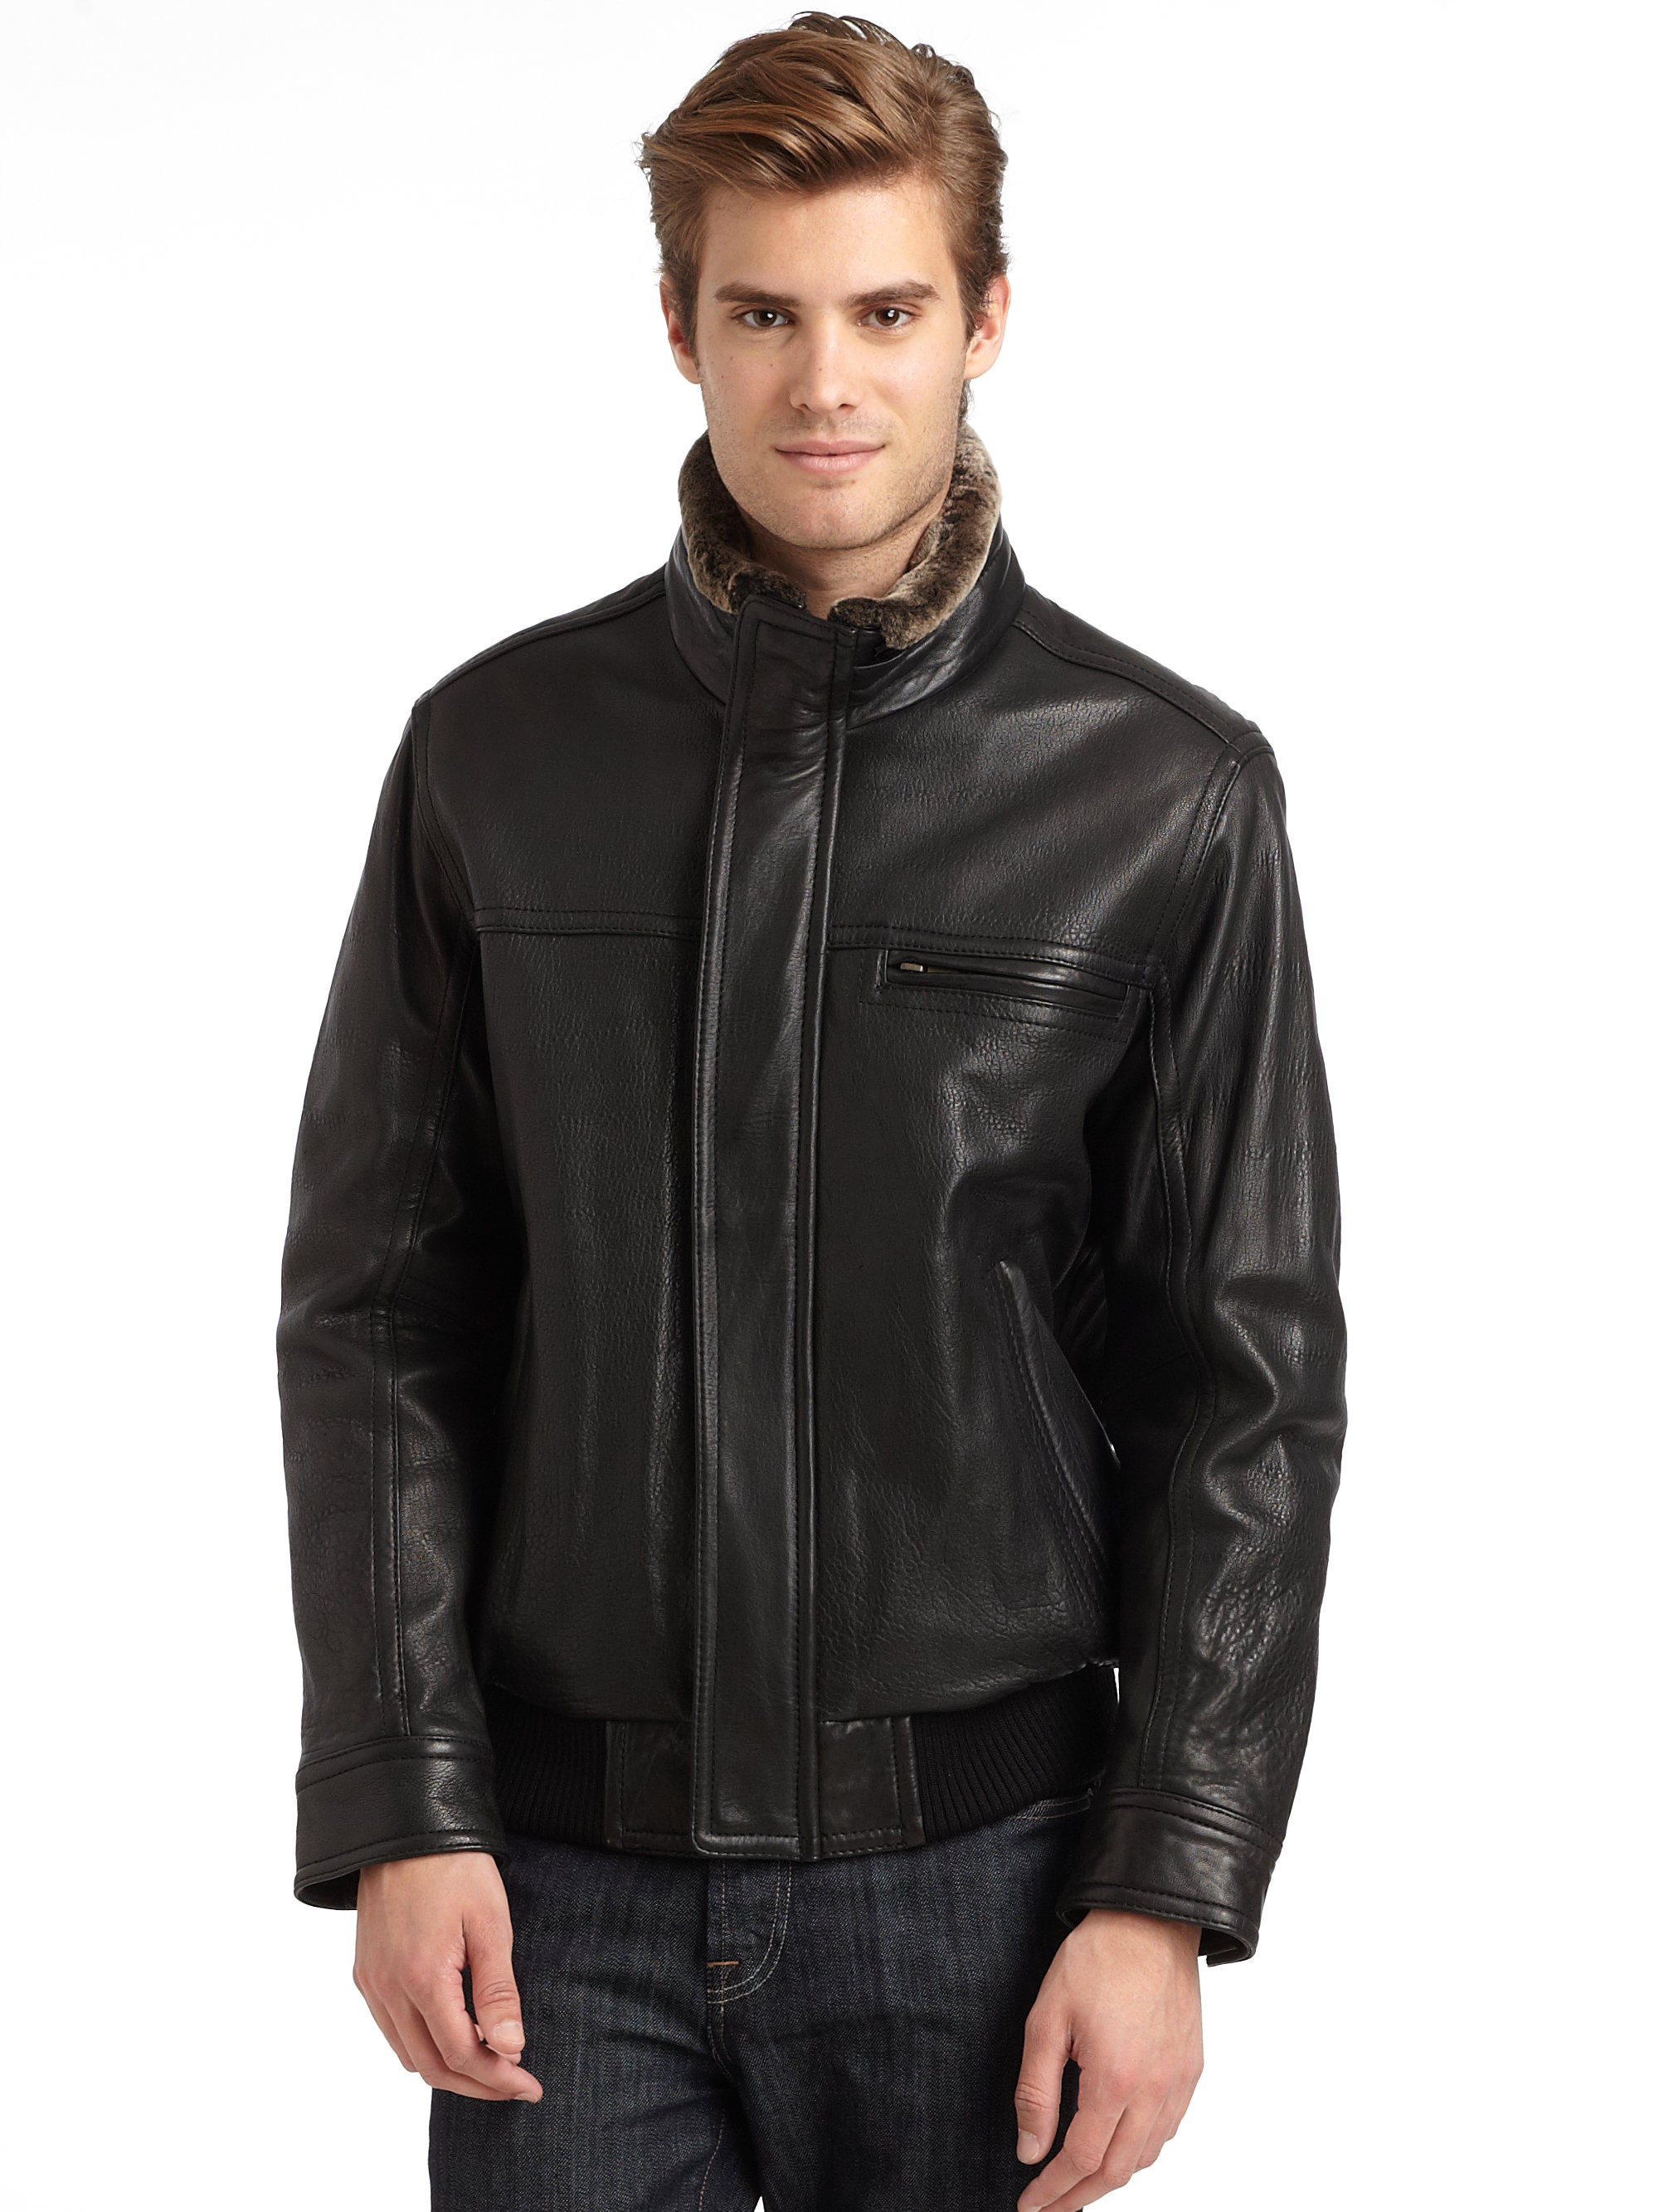 Lyst - Marc new york Leather Fur Collar Jacket in Black for Men